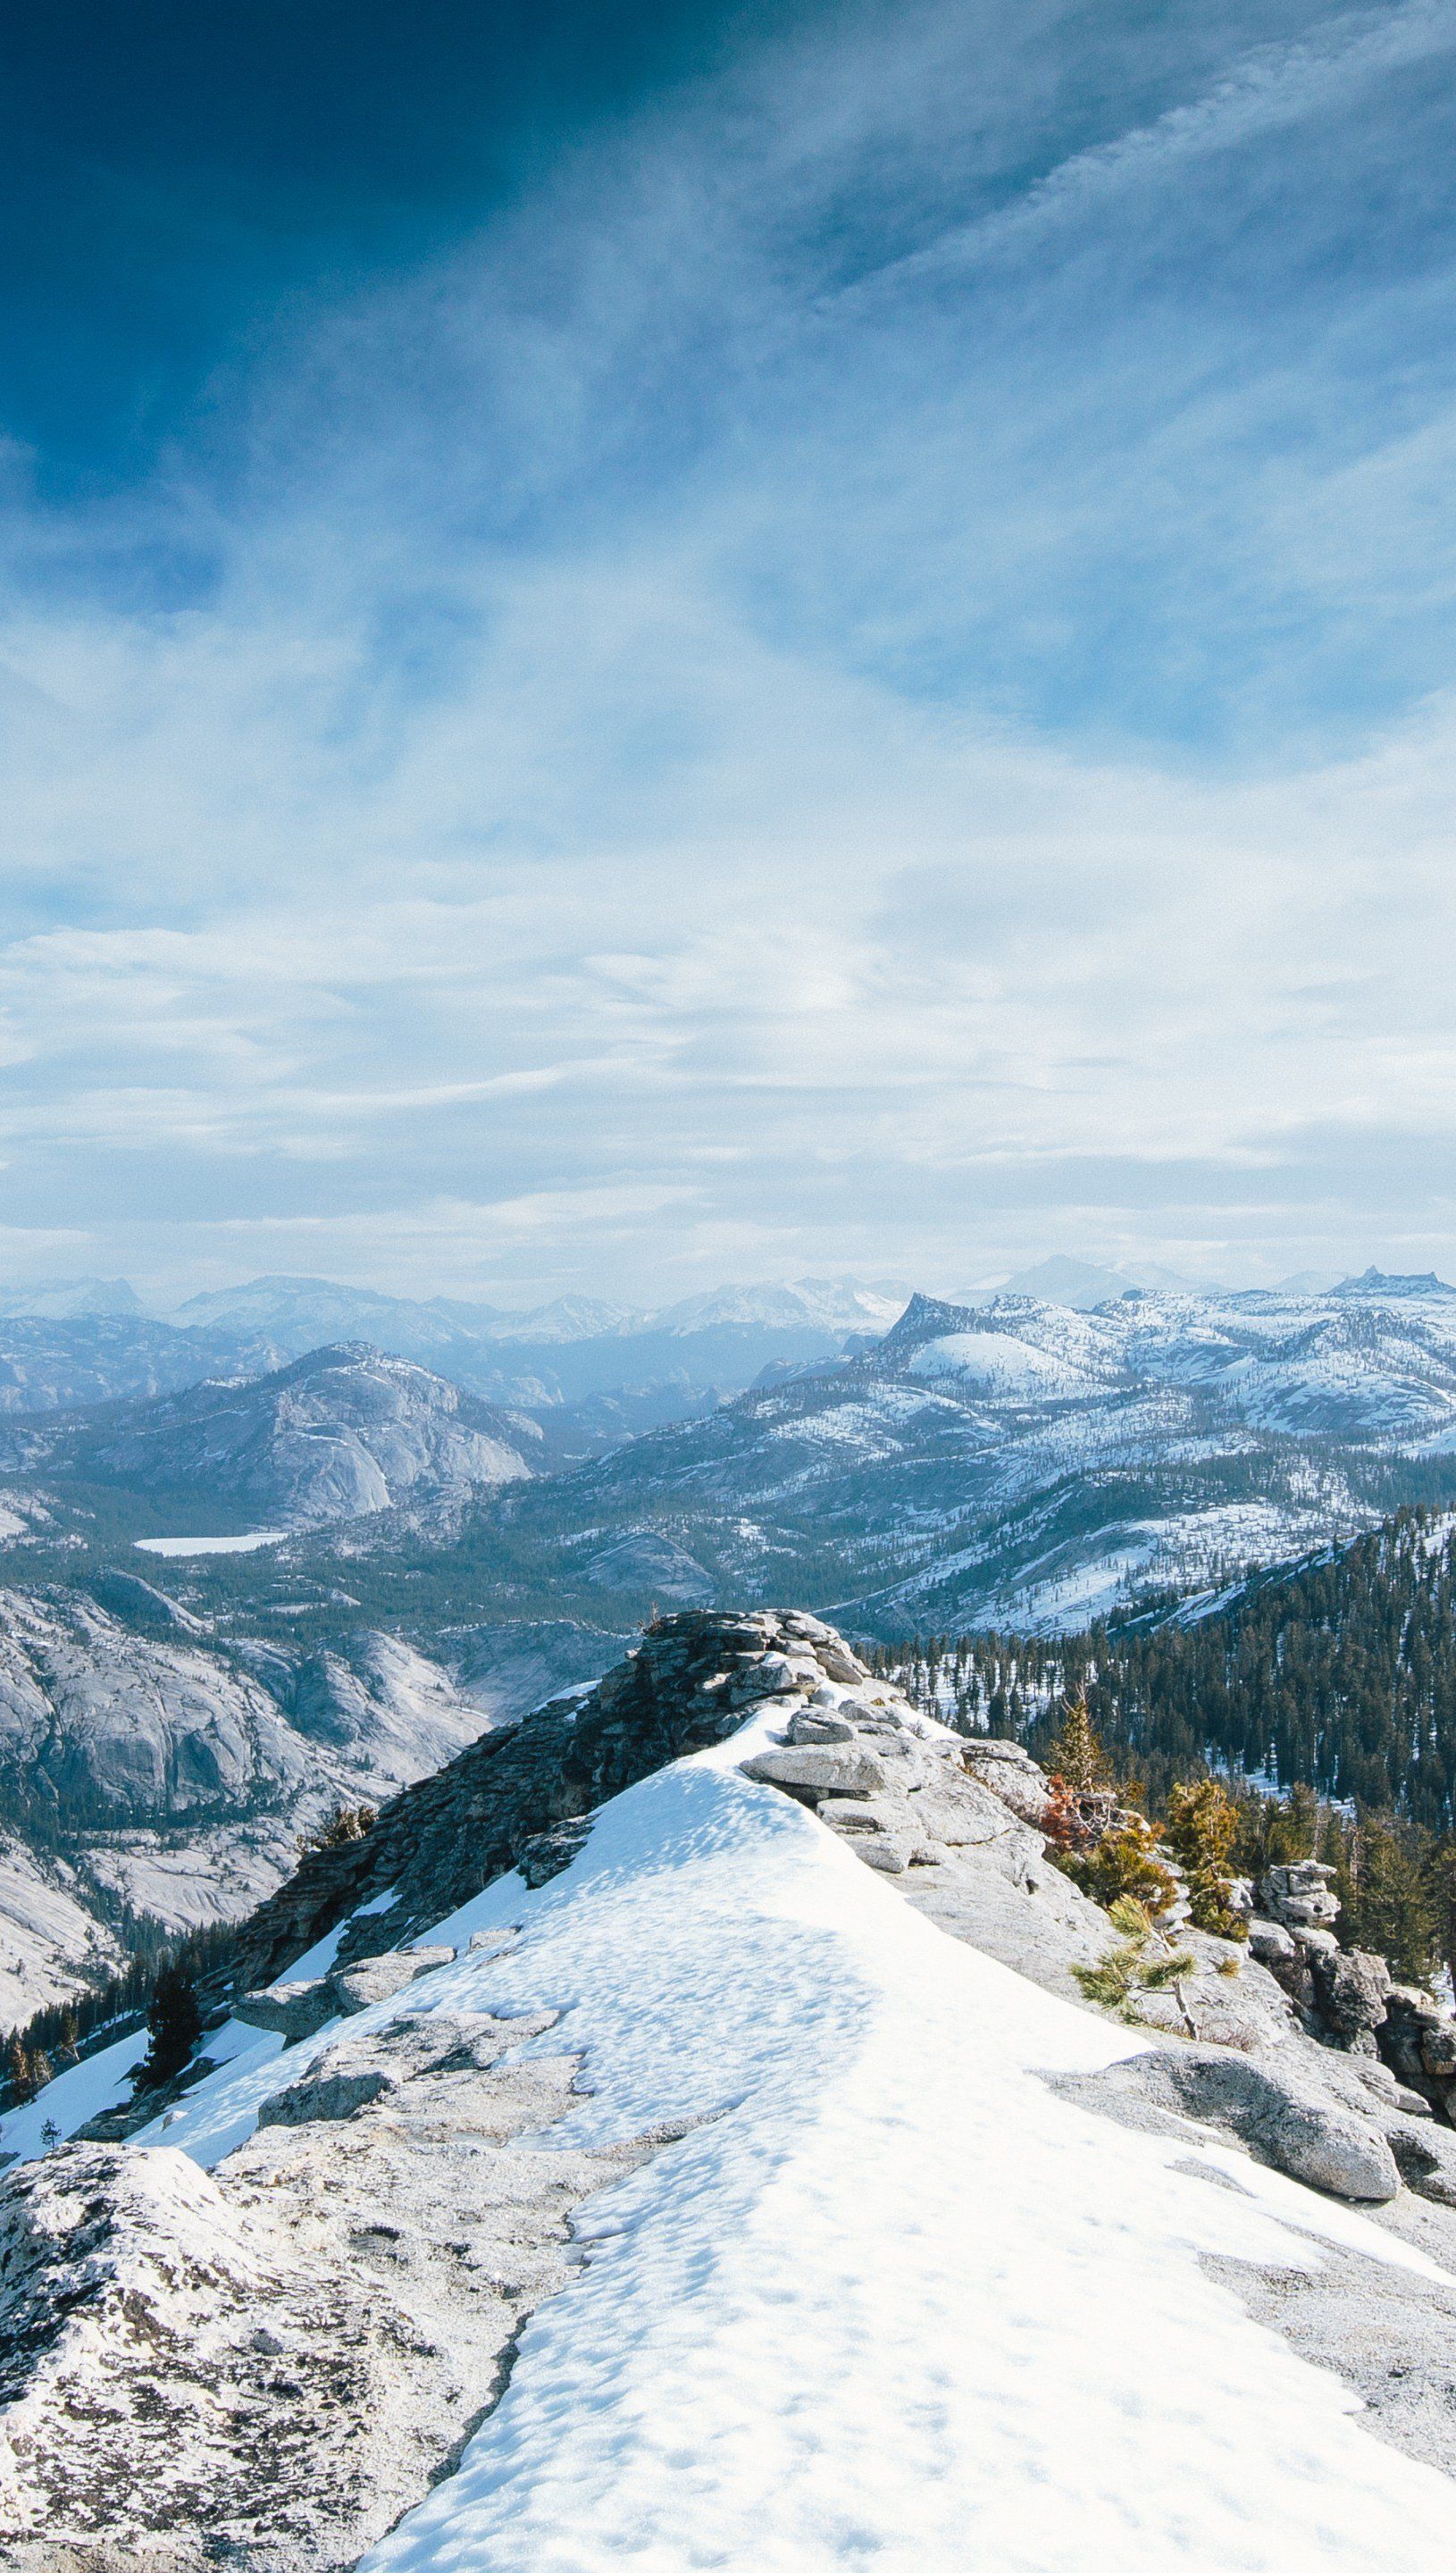 Yosemite during the winter Wallpaper 5k Ultra HD